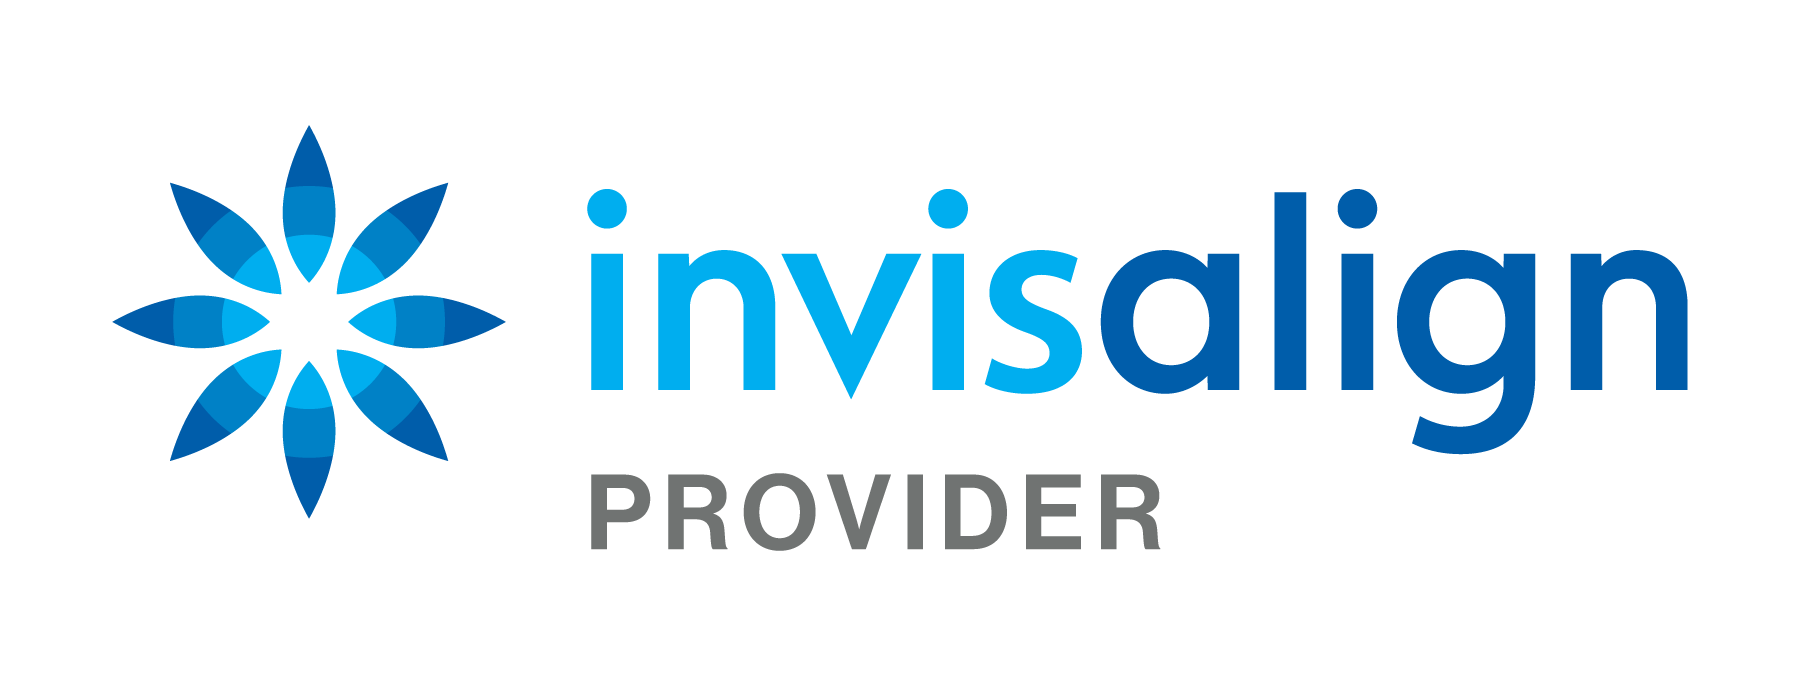 1588155520-1587379888-invisalign-provider-logo-blue-en-png